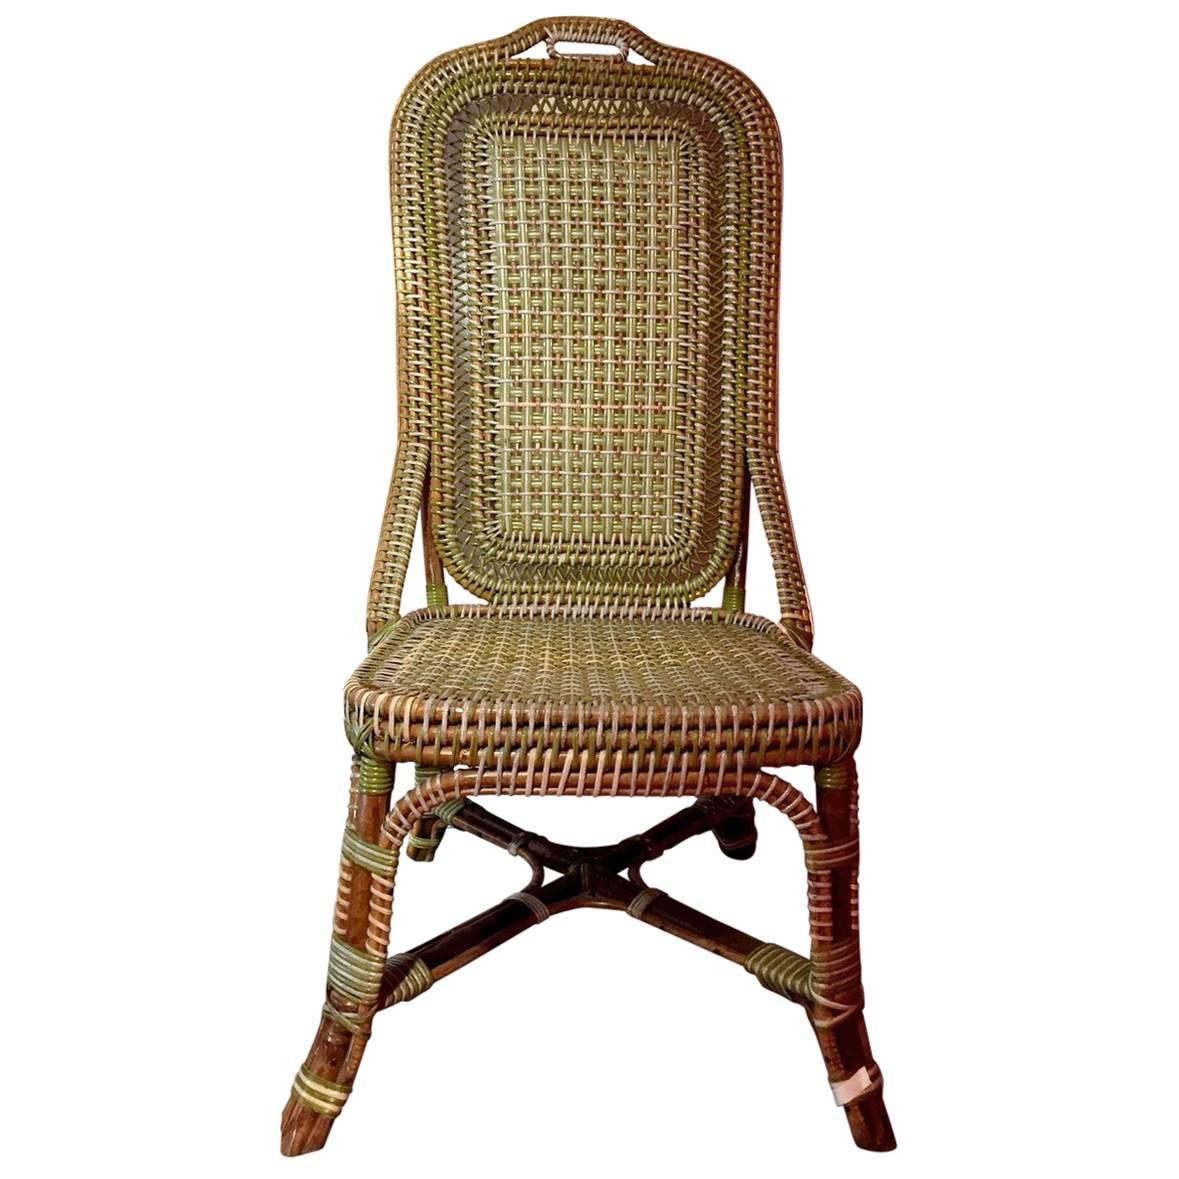 Perret & Vibert, Green Rattan Chair, circa 1880